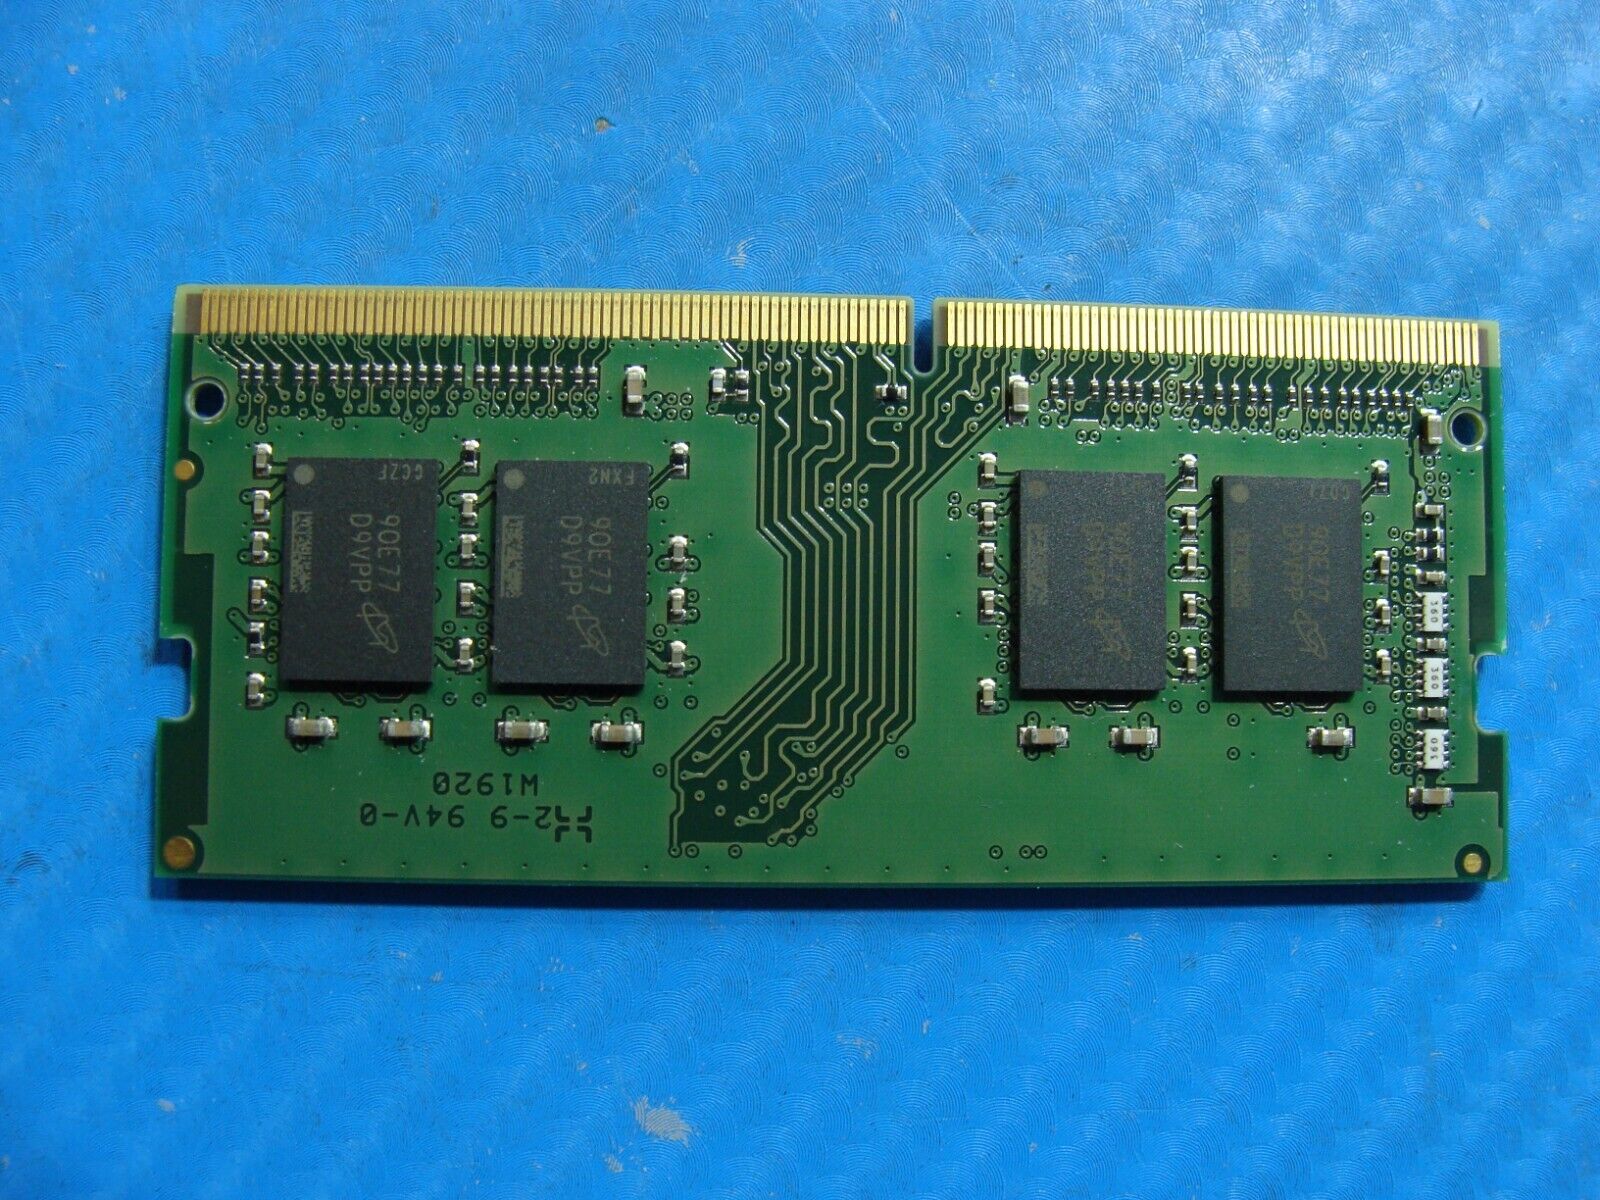 Dell 7480 Kingston 8GB 1Rx8 PC4-2400T Memory RAM SO-DIMM KMKYF9-MIE